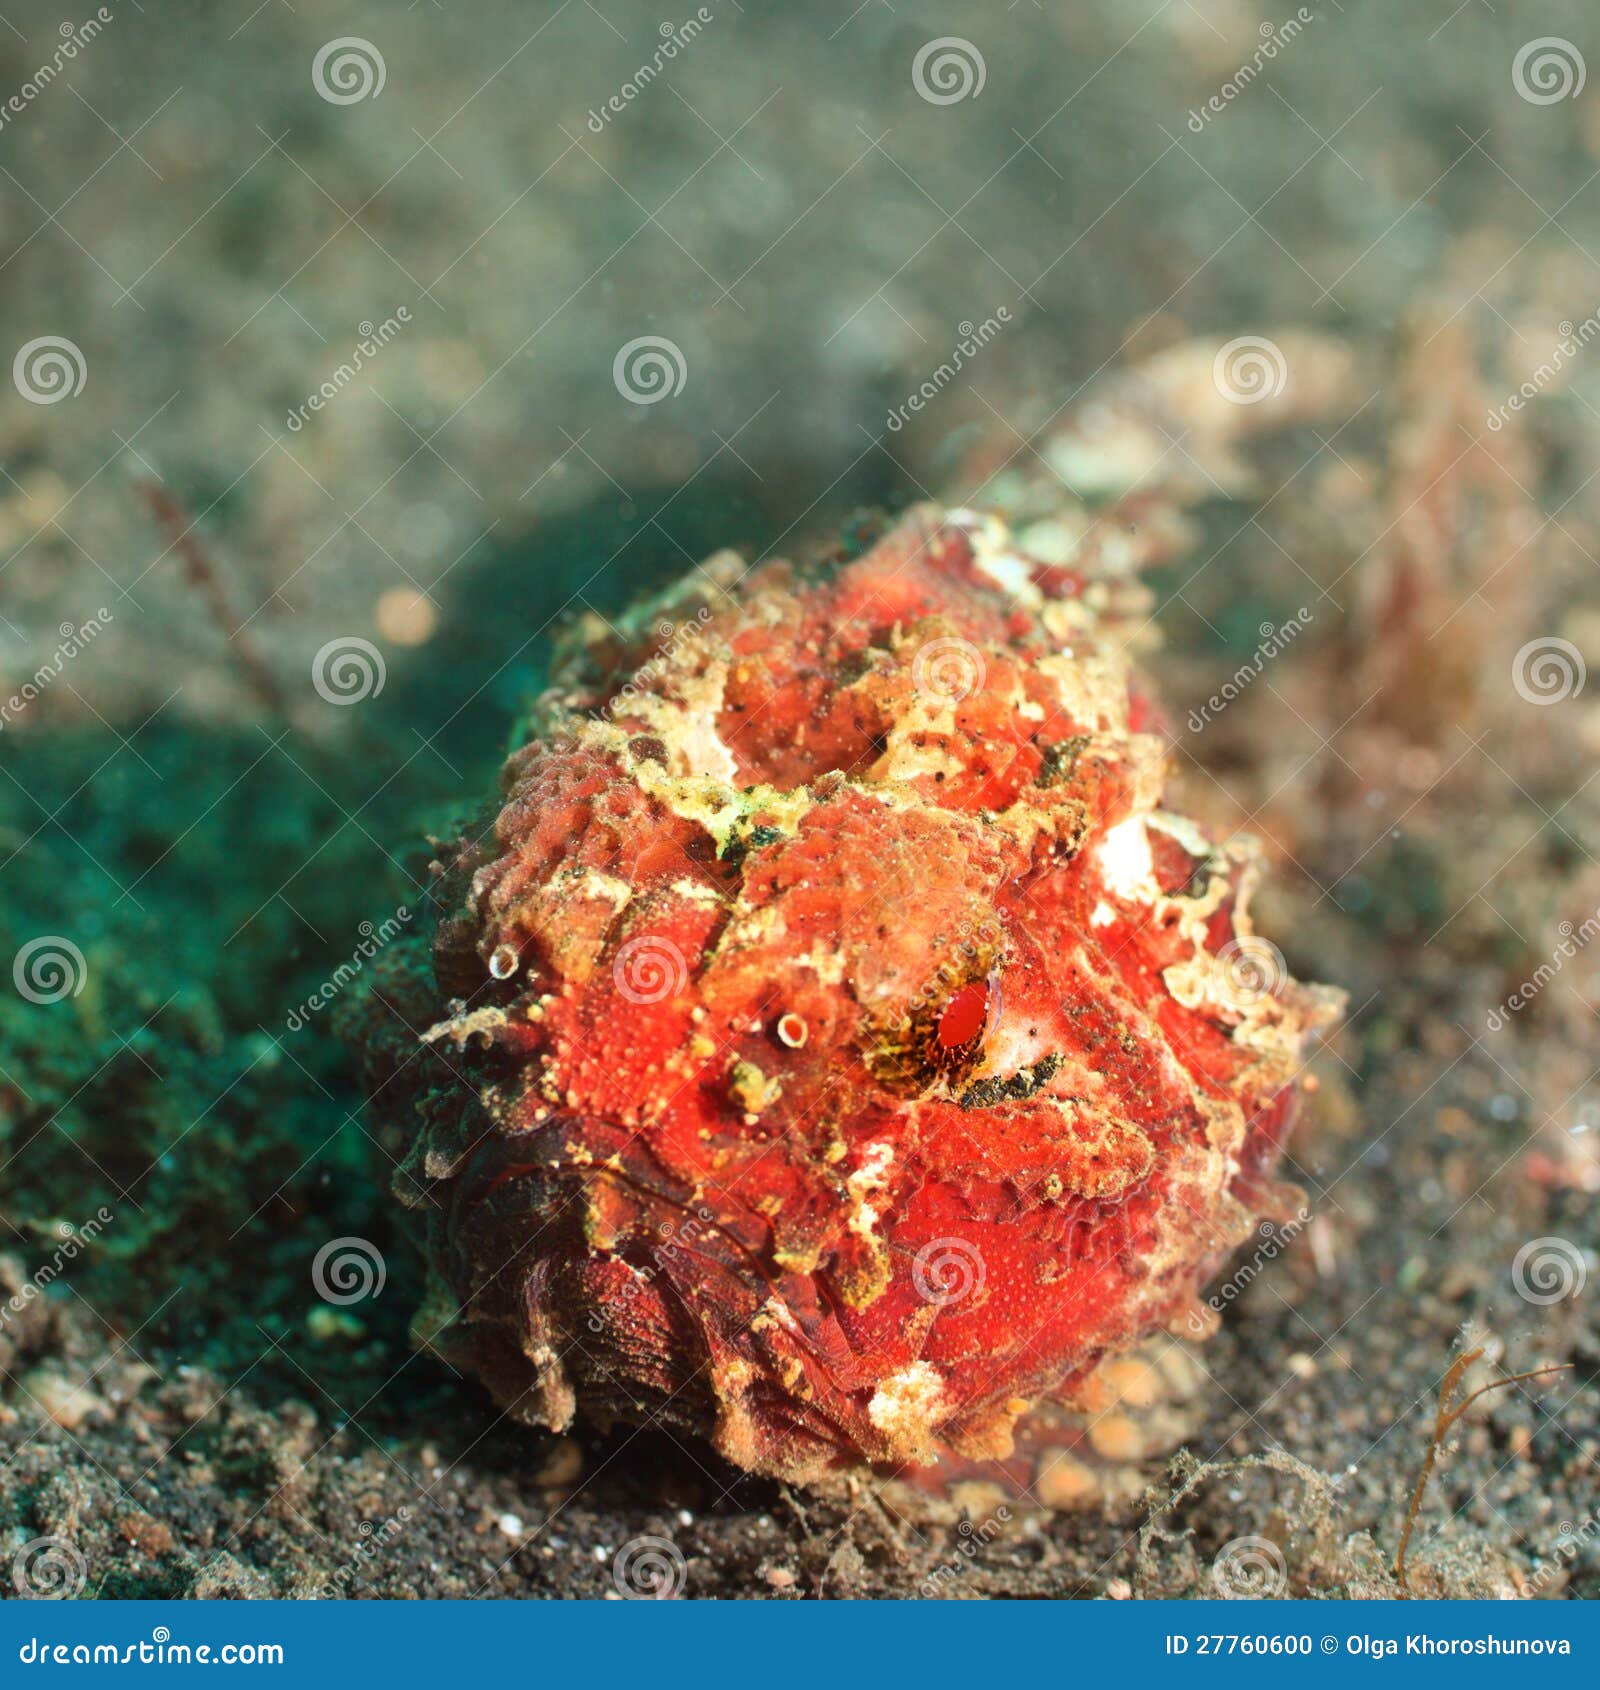 Macro shot of a tropical fish frogfish underwater